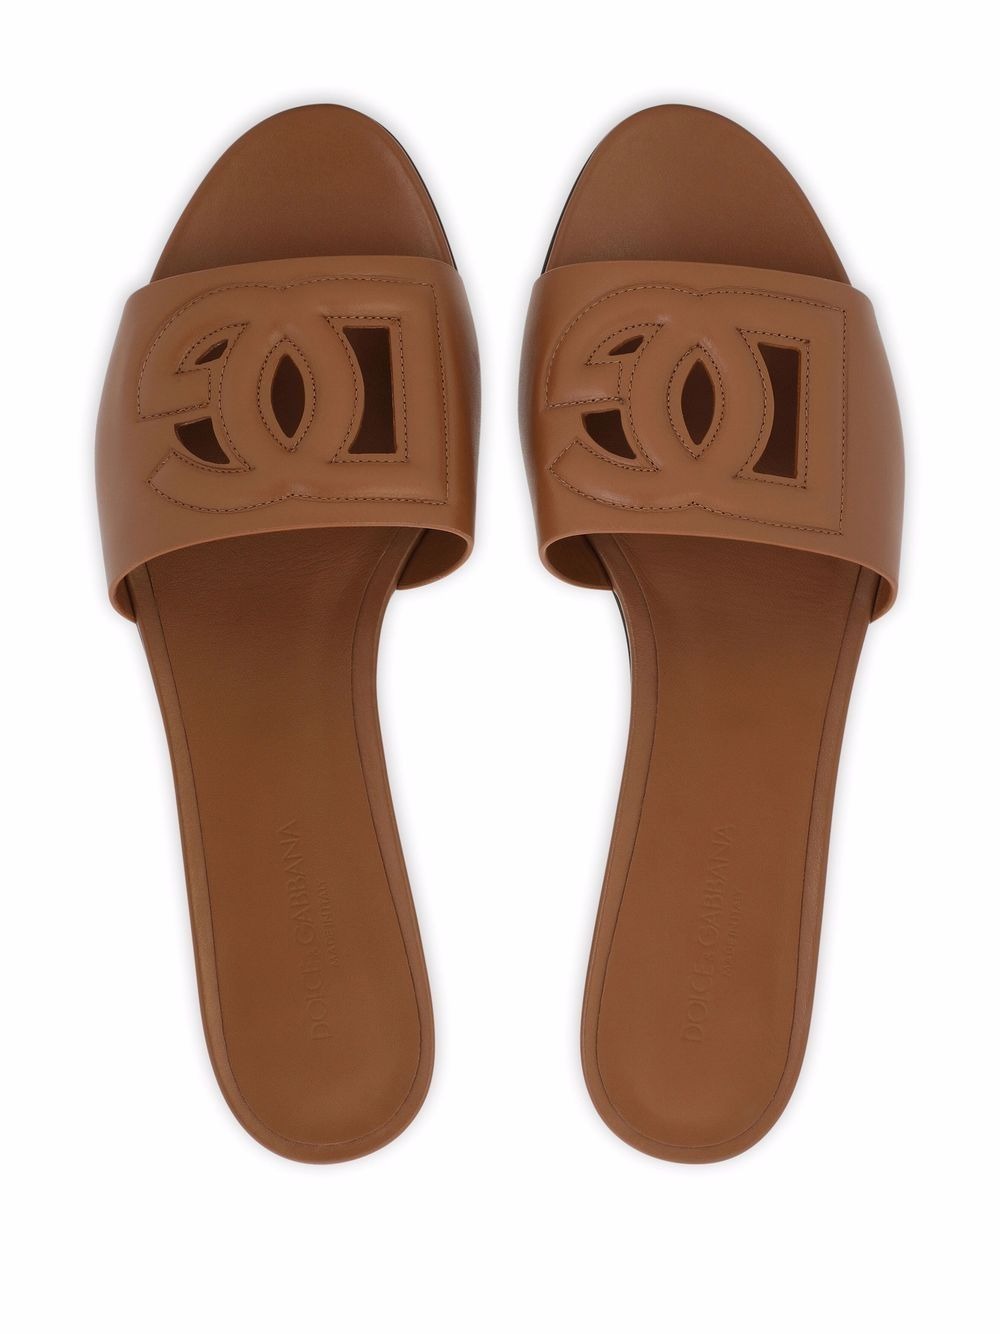 Dolce & Gabbana Formale Sandal in Light Brown